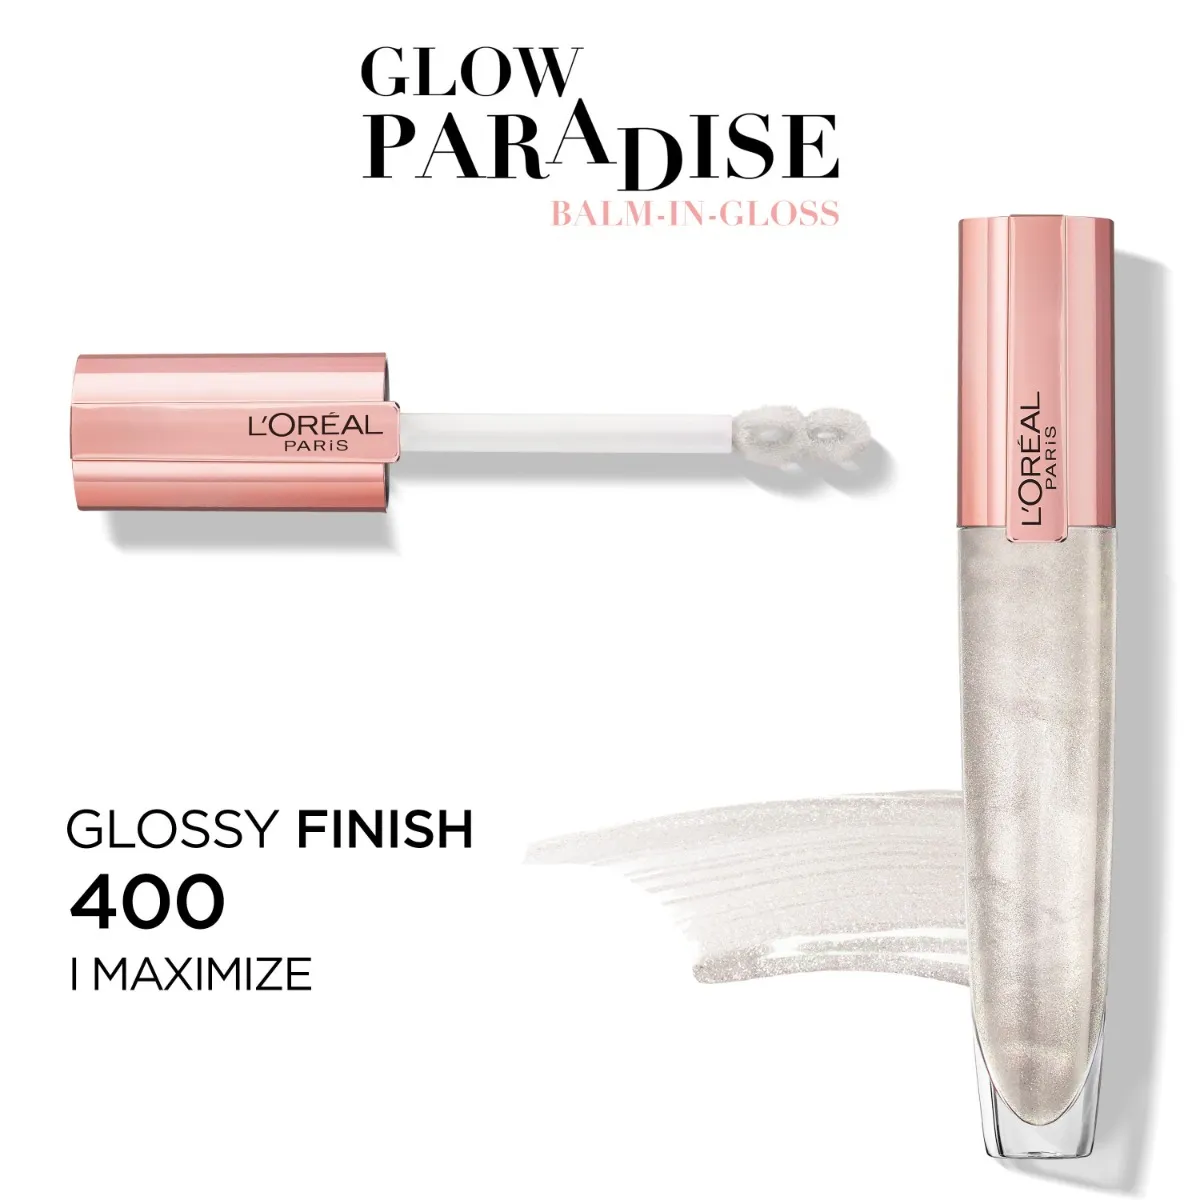 Loréal Paris Glow Paradise Balm in Gloss odstín 400 I Maximize lesk na rty 7 ml